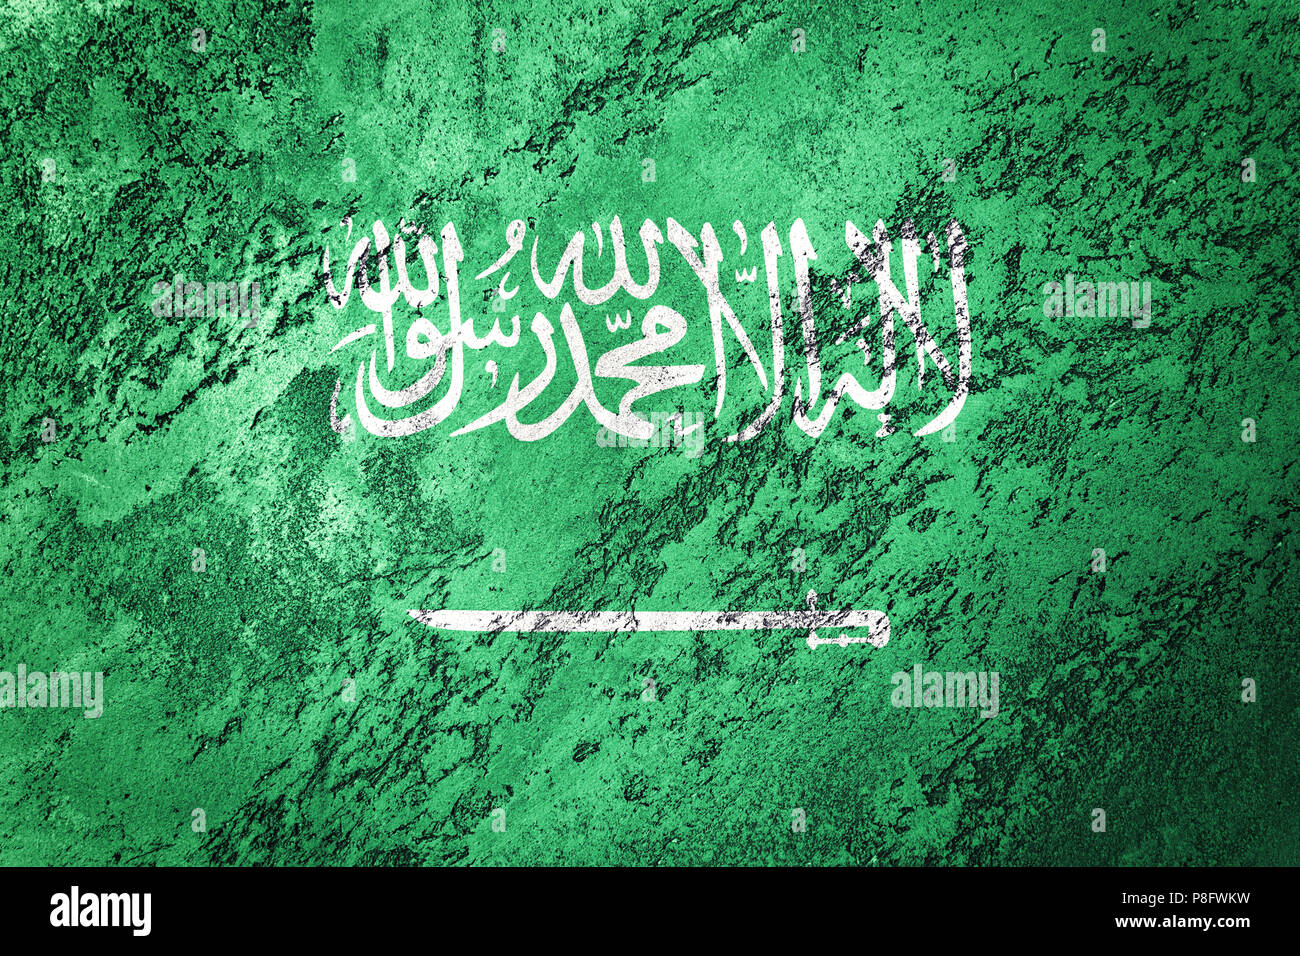 Grunge Saudi Arabia flag. Saudi Arabia flag with grunge texture. Stock Photo